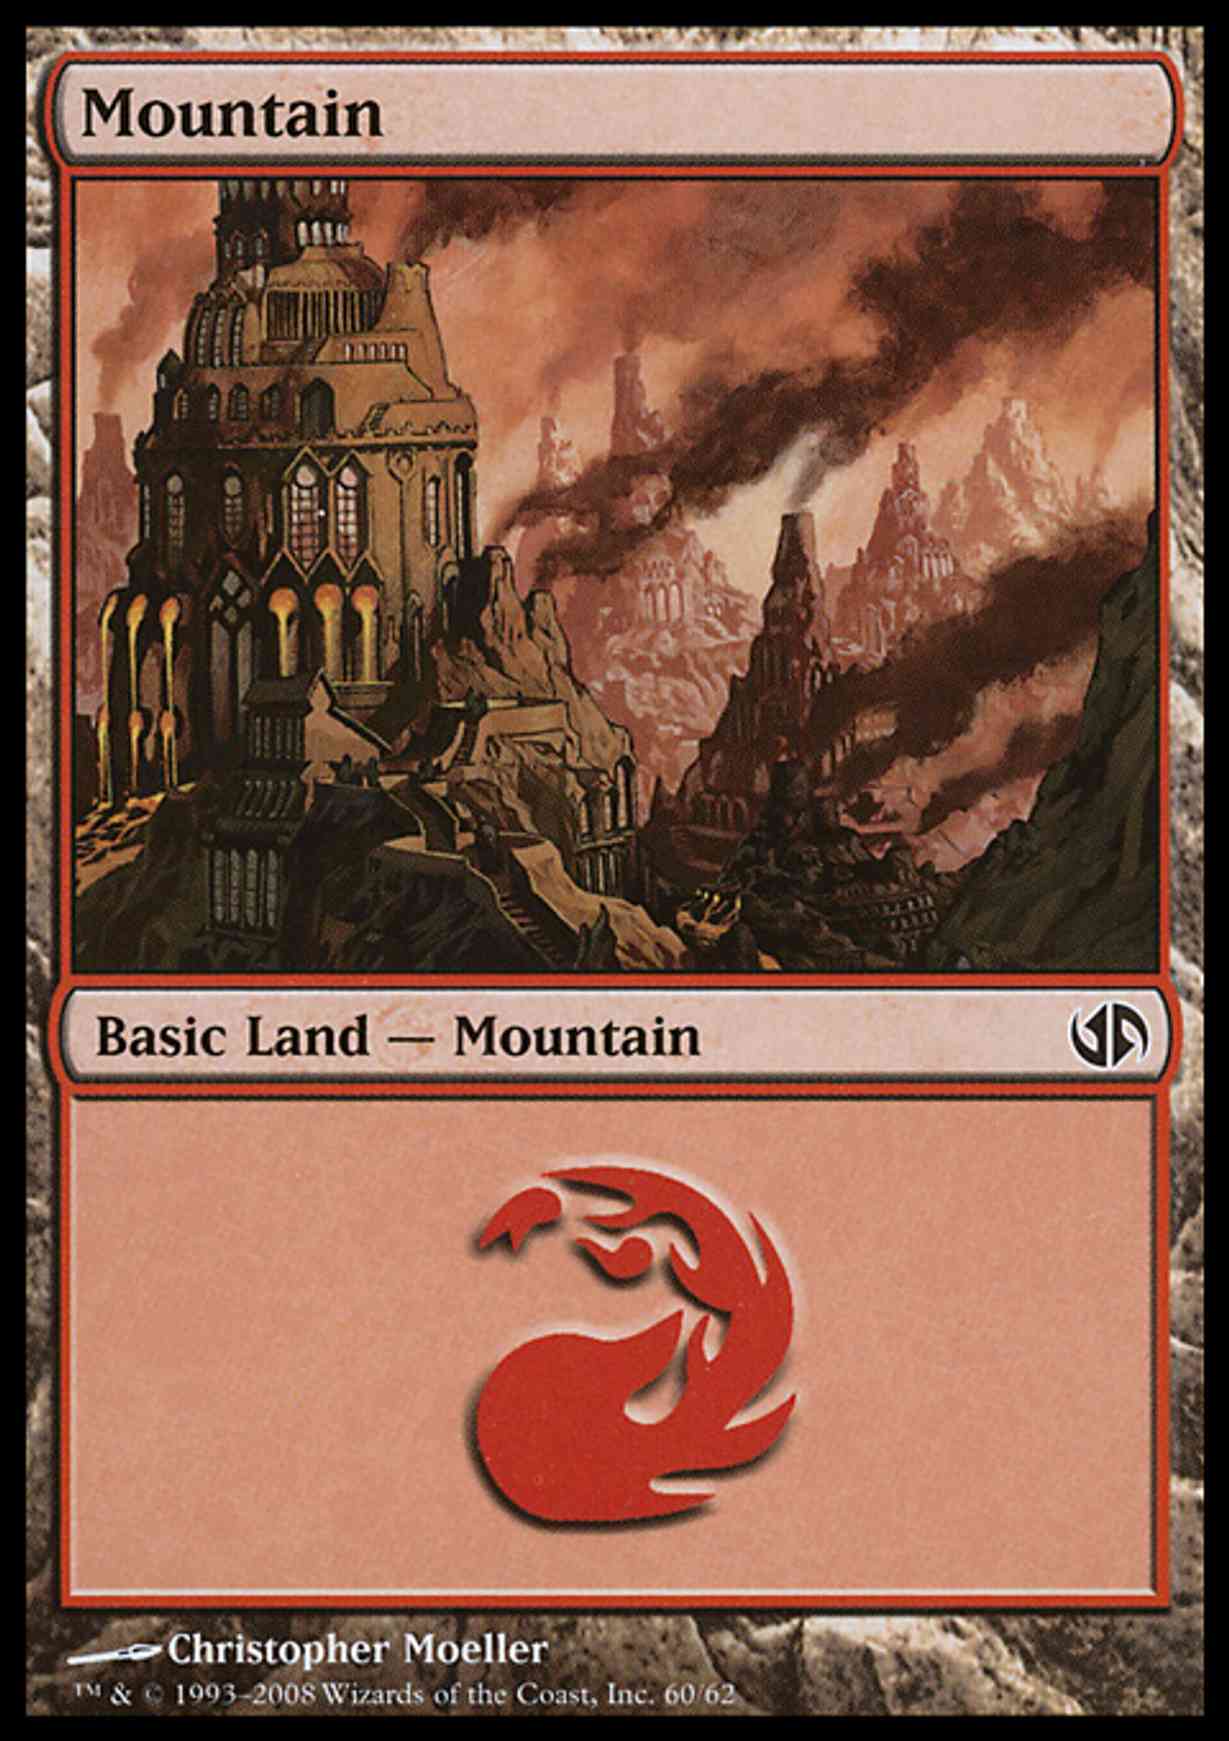 Mountain (60)  magic card front